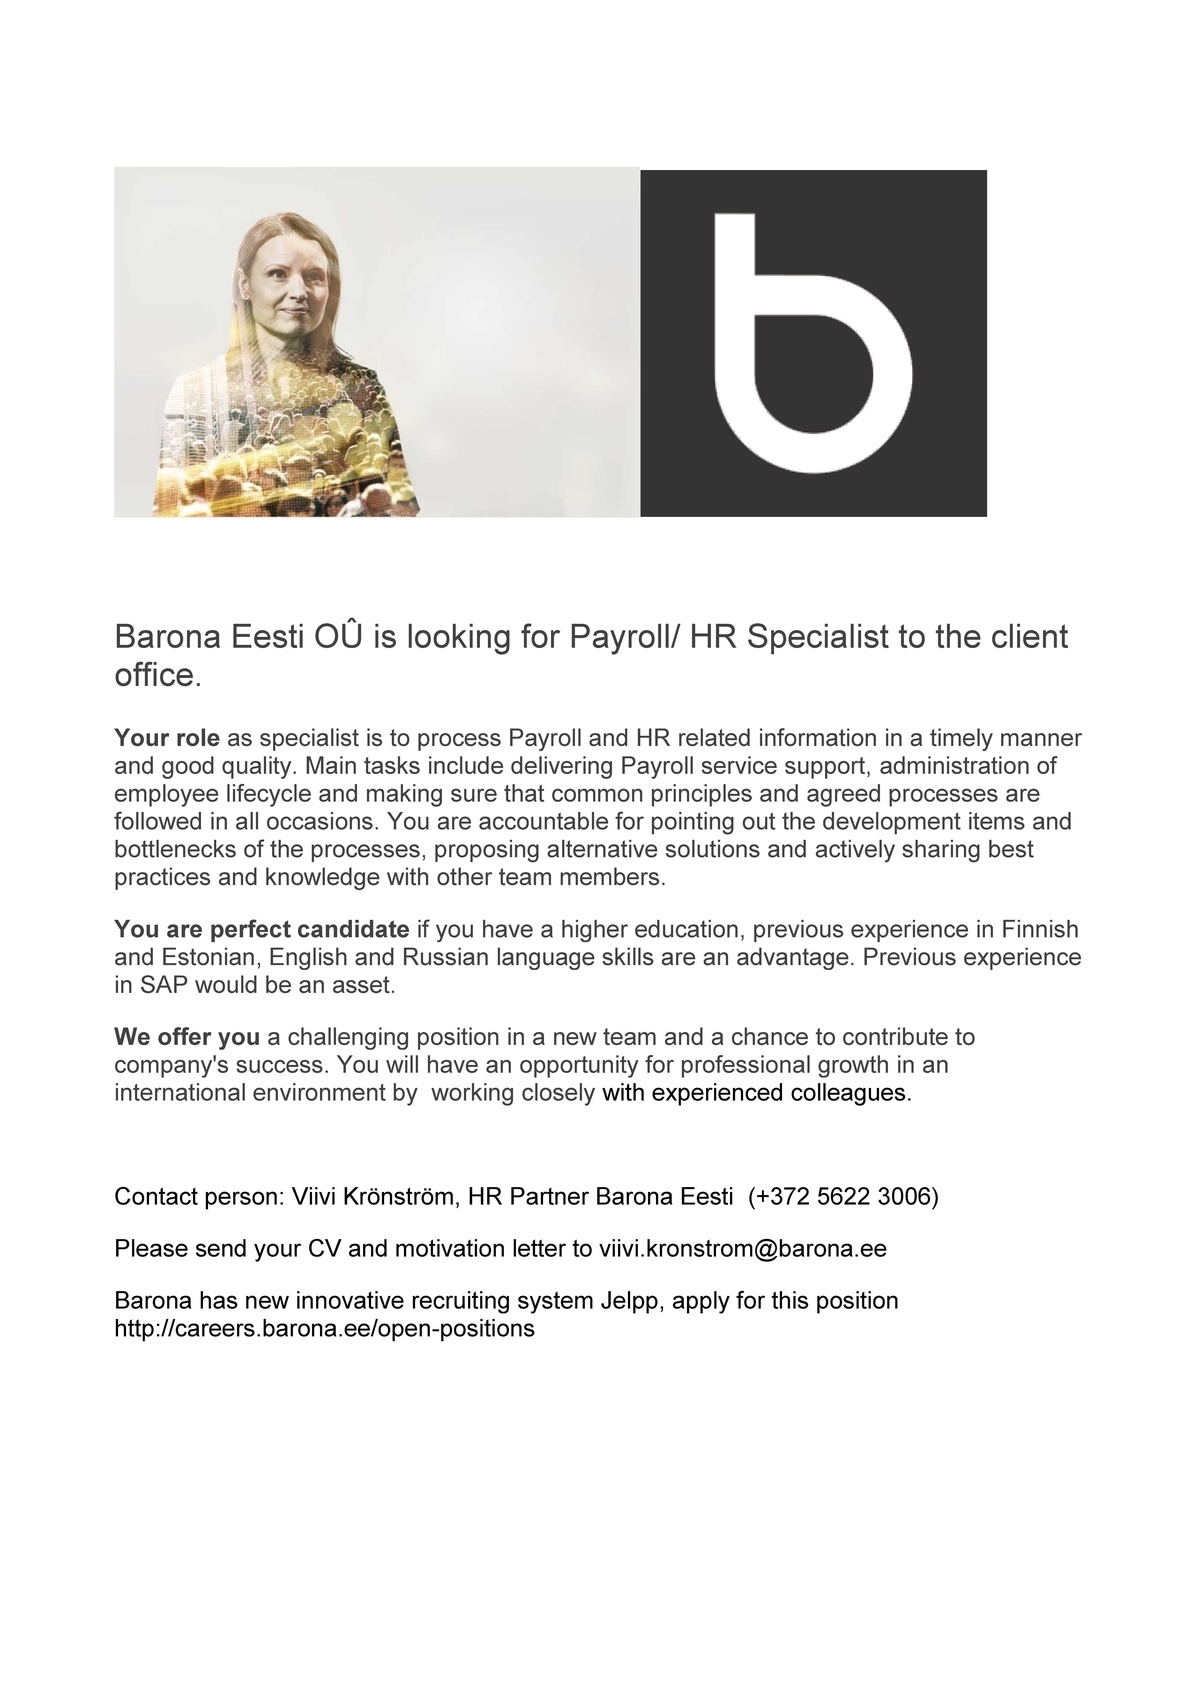 Barona Eesti OÜ Payroll/ HR Specialist